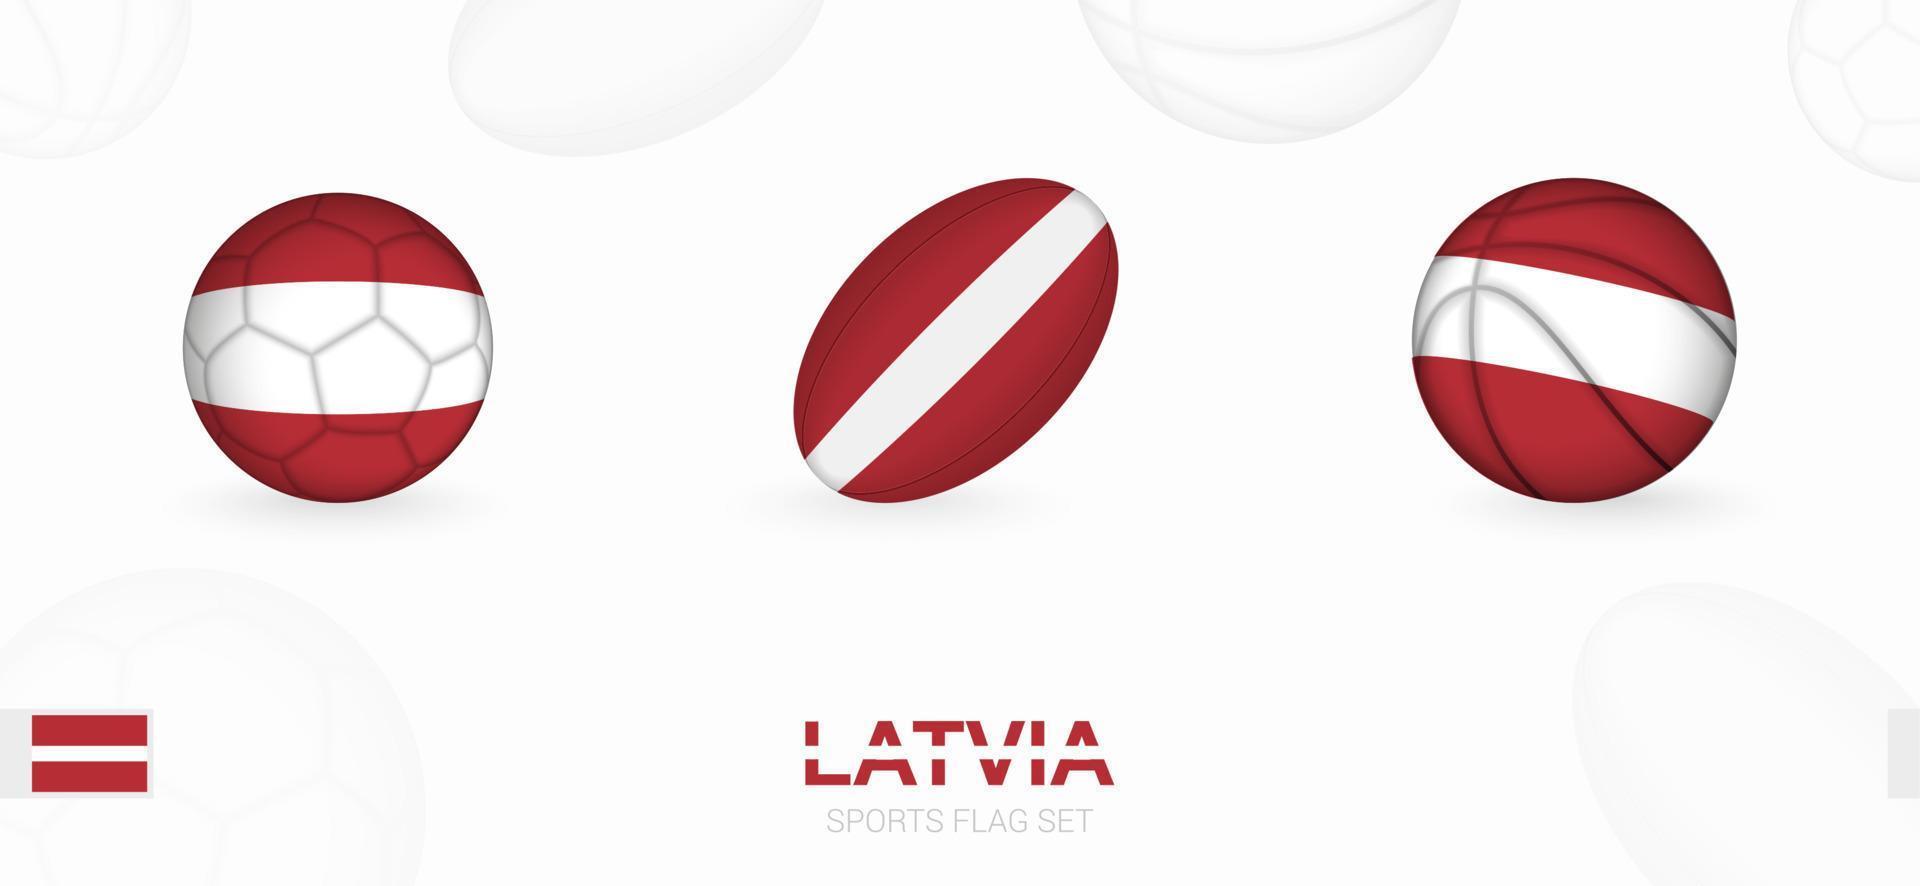 sport- pictogrammen voor Amerikaans voetbal, rugby en basketbal met de vlag van Letland. vector